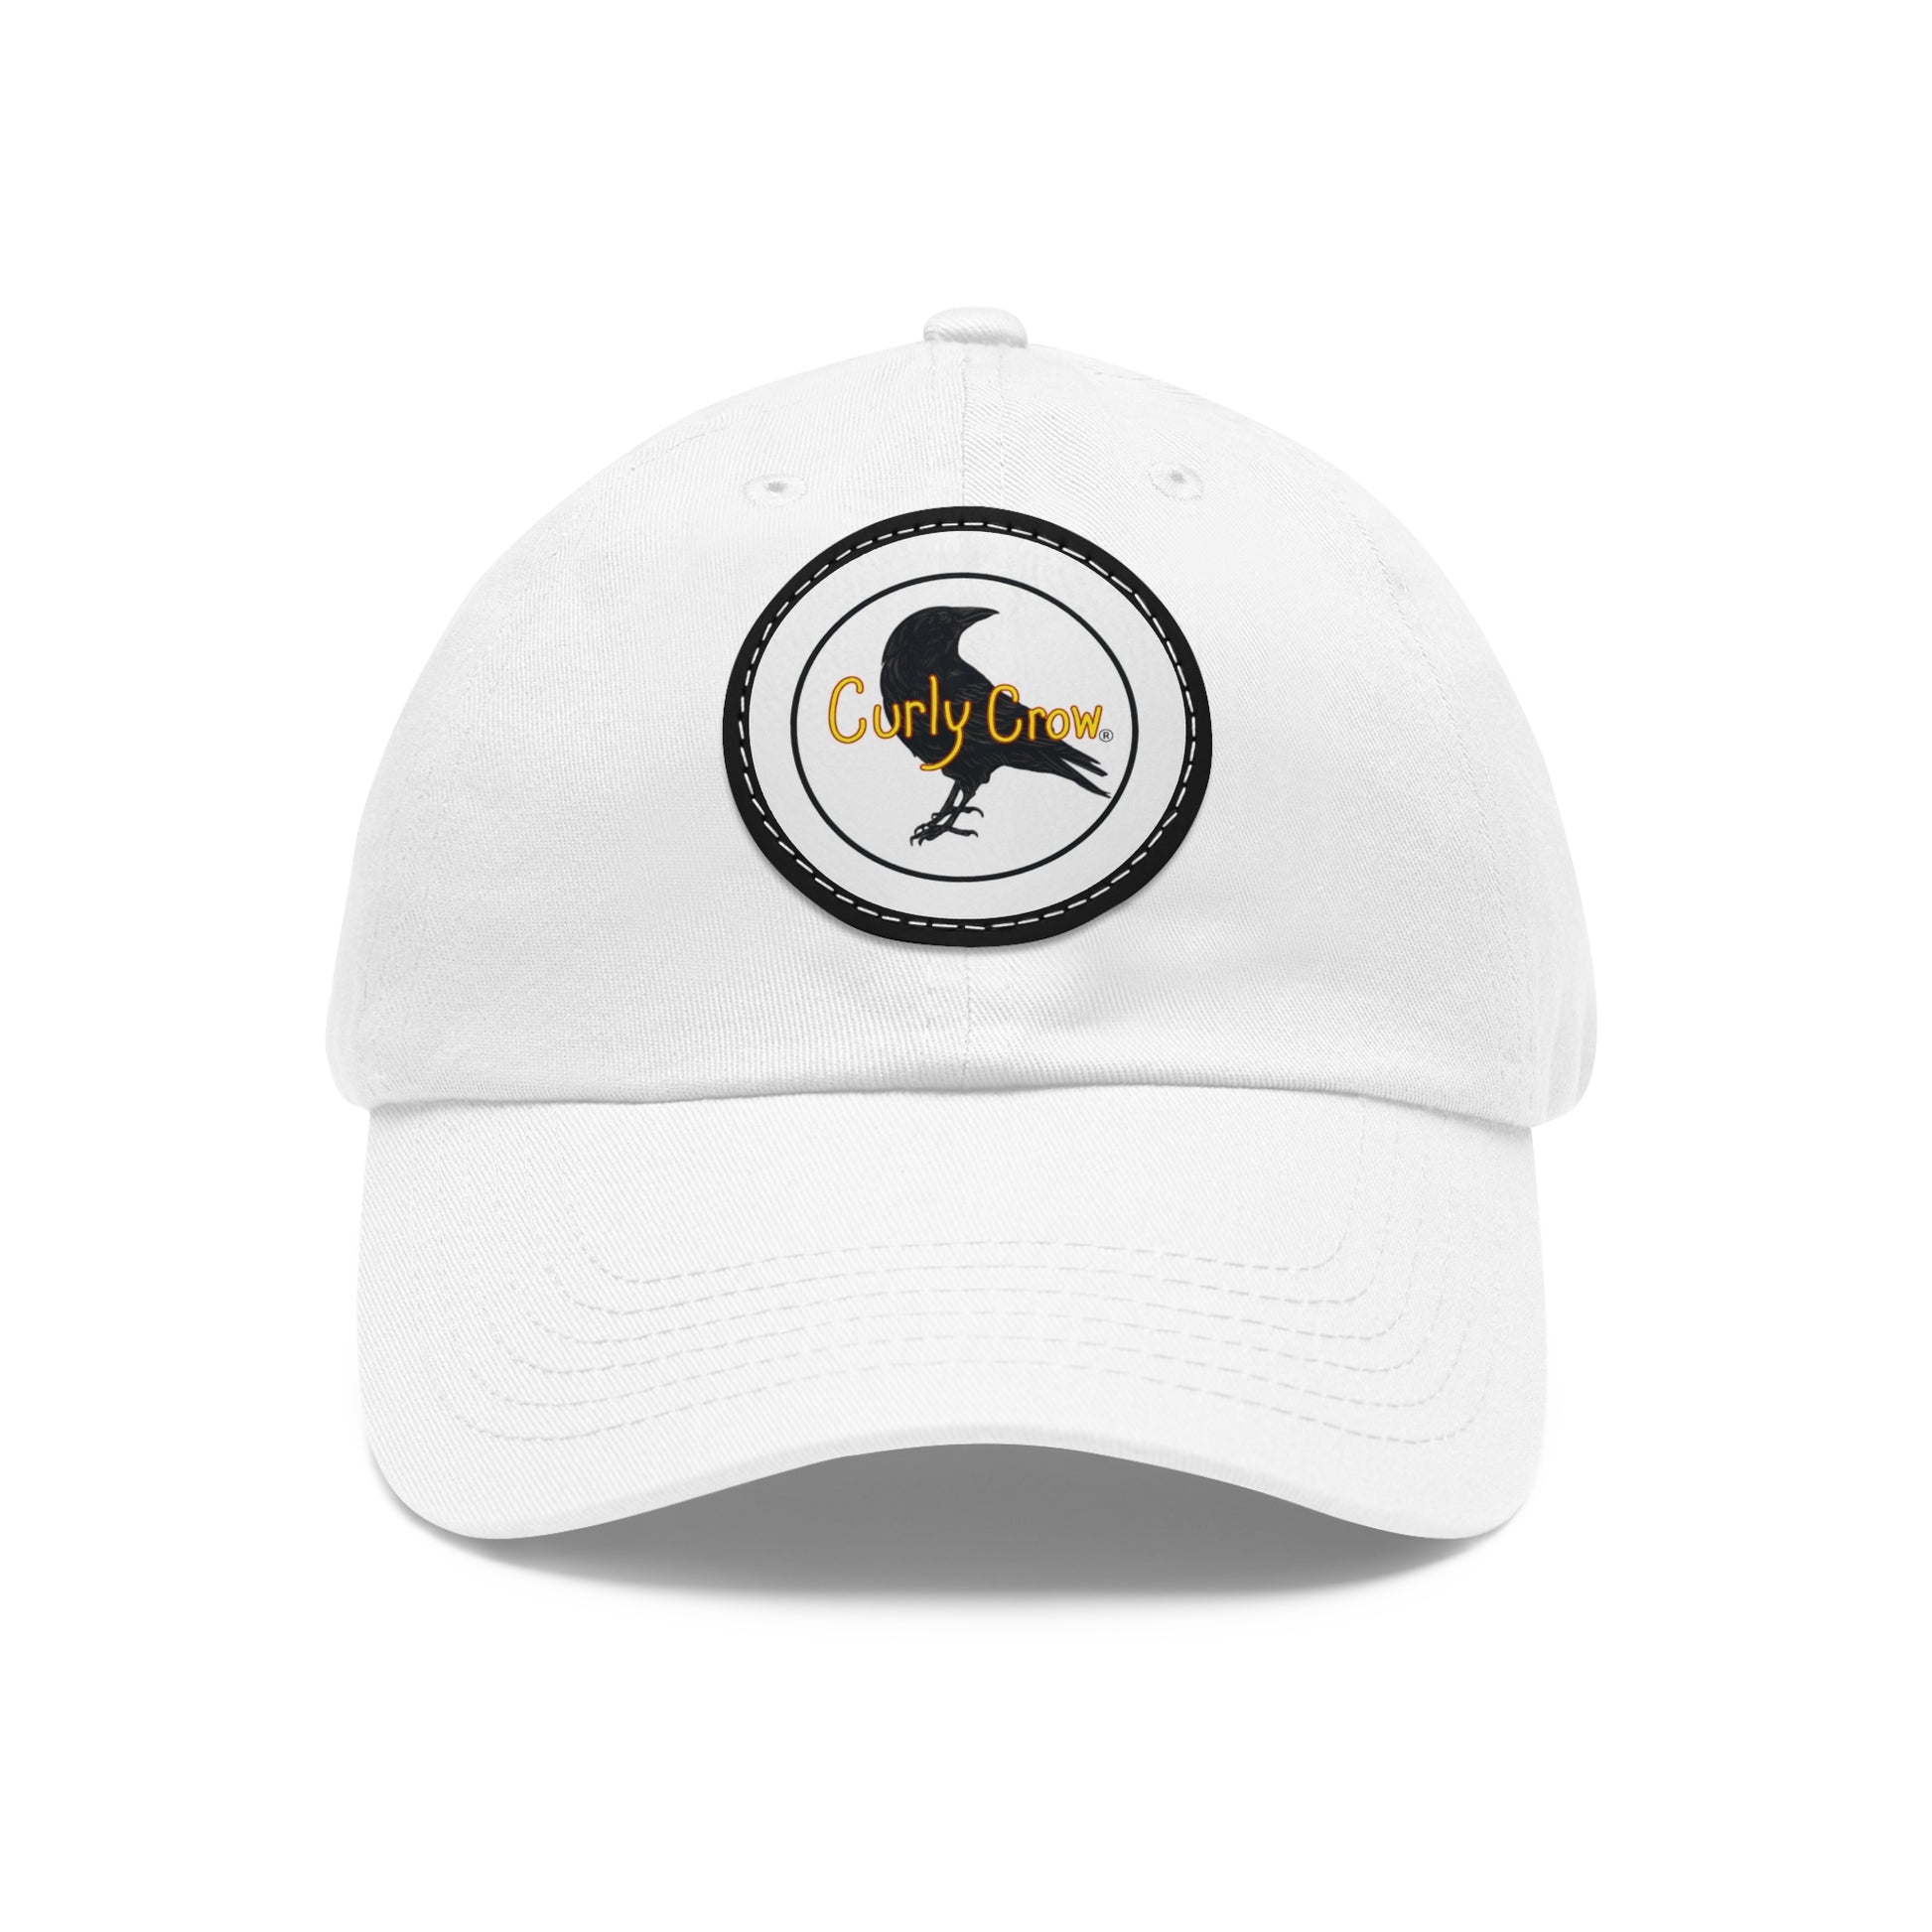 Curly Crow cap - white baseball hat